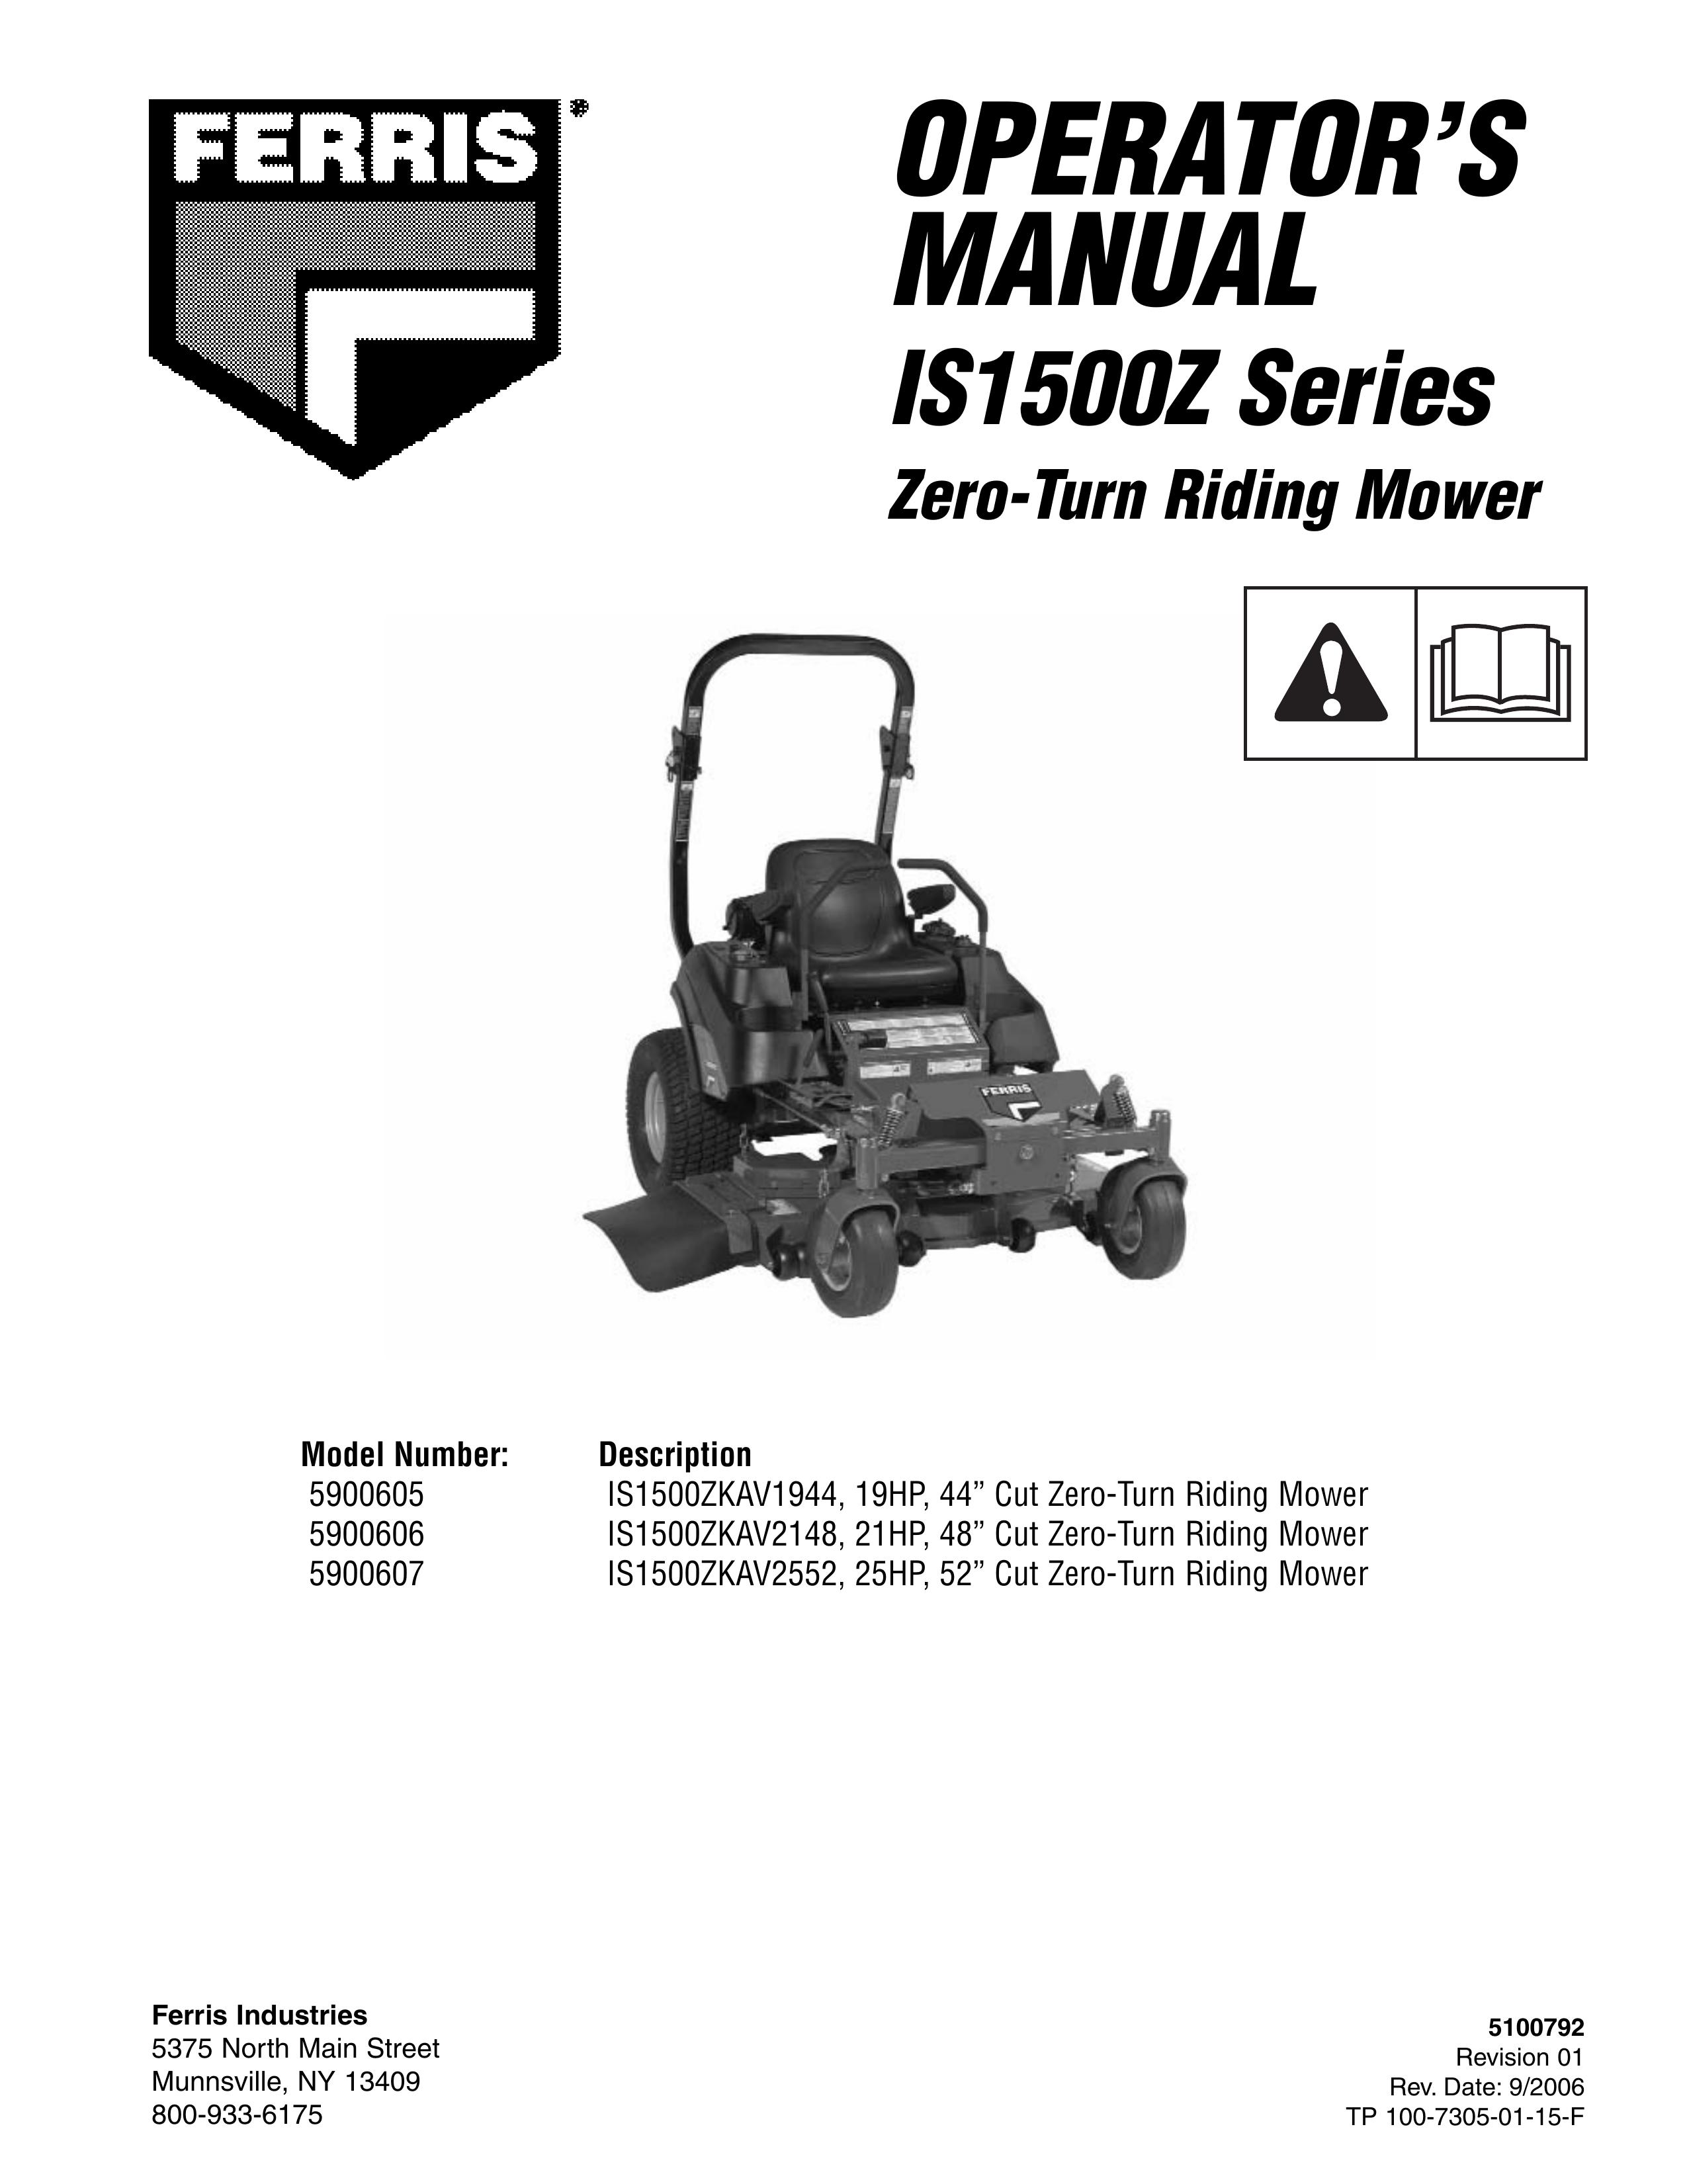 Ferris Industries 5900606 Lawn Mower User Manual